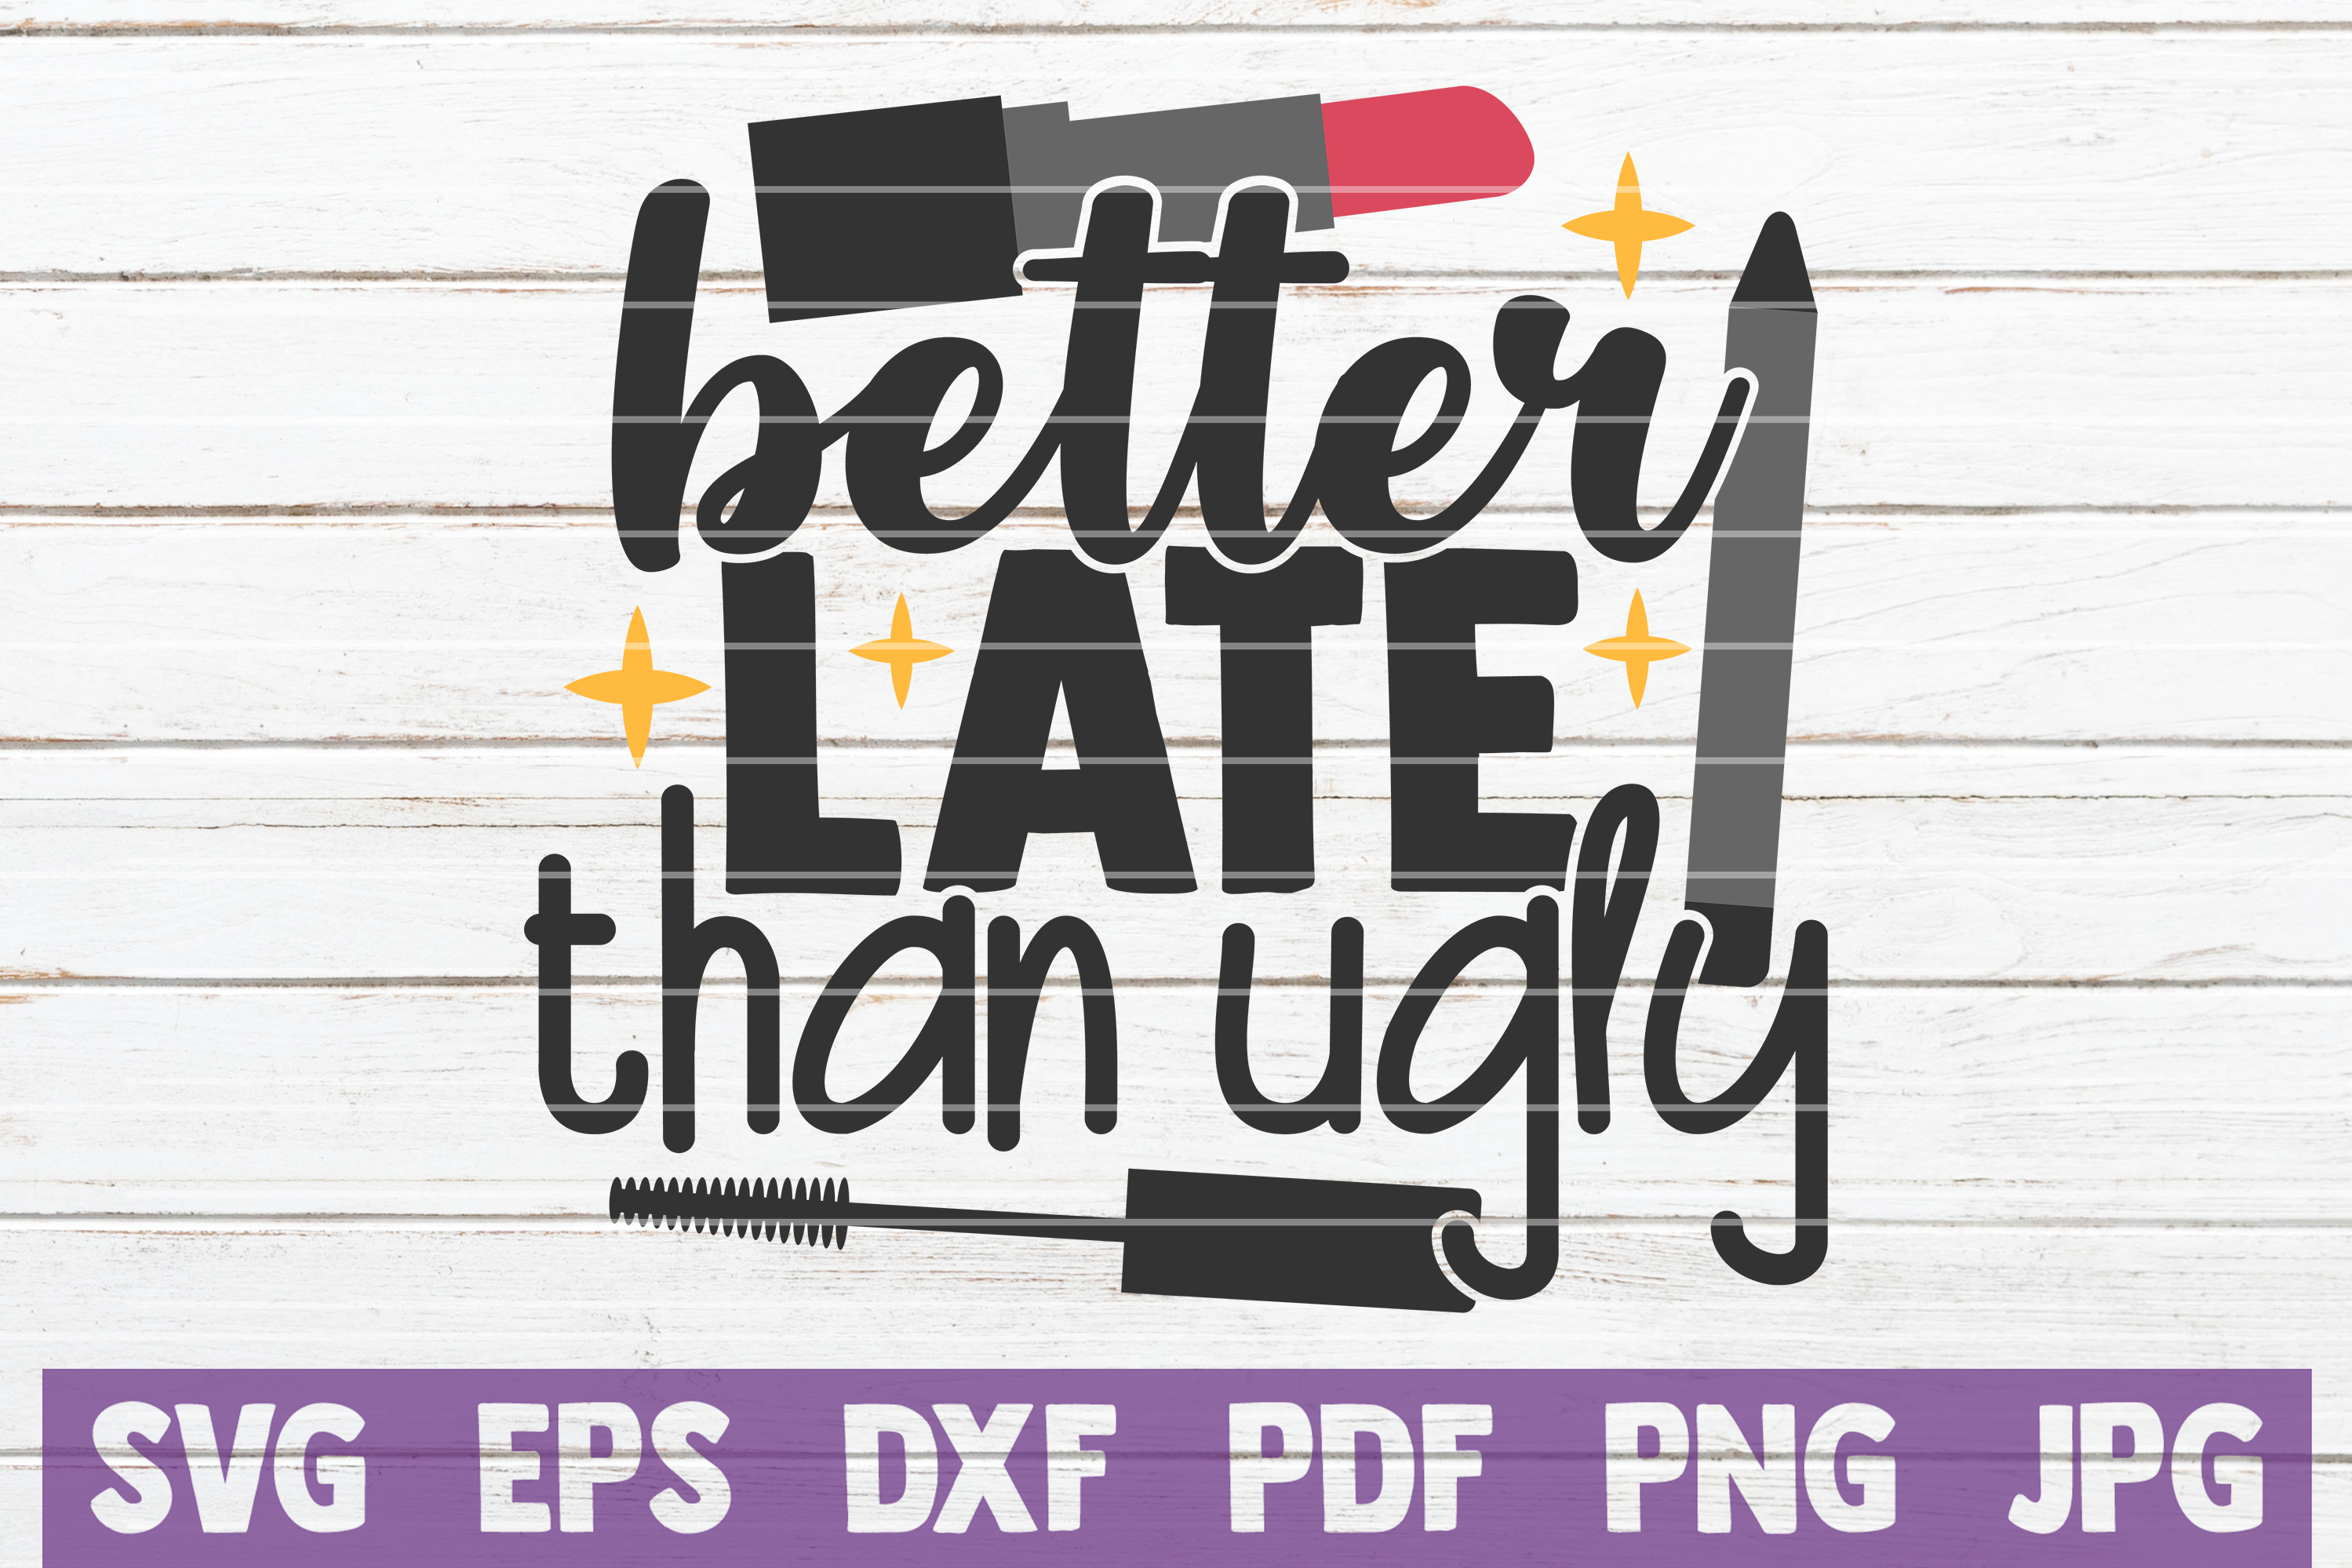 Better Late Than Ugly 413561 Cut Files Design Bundles